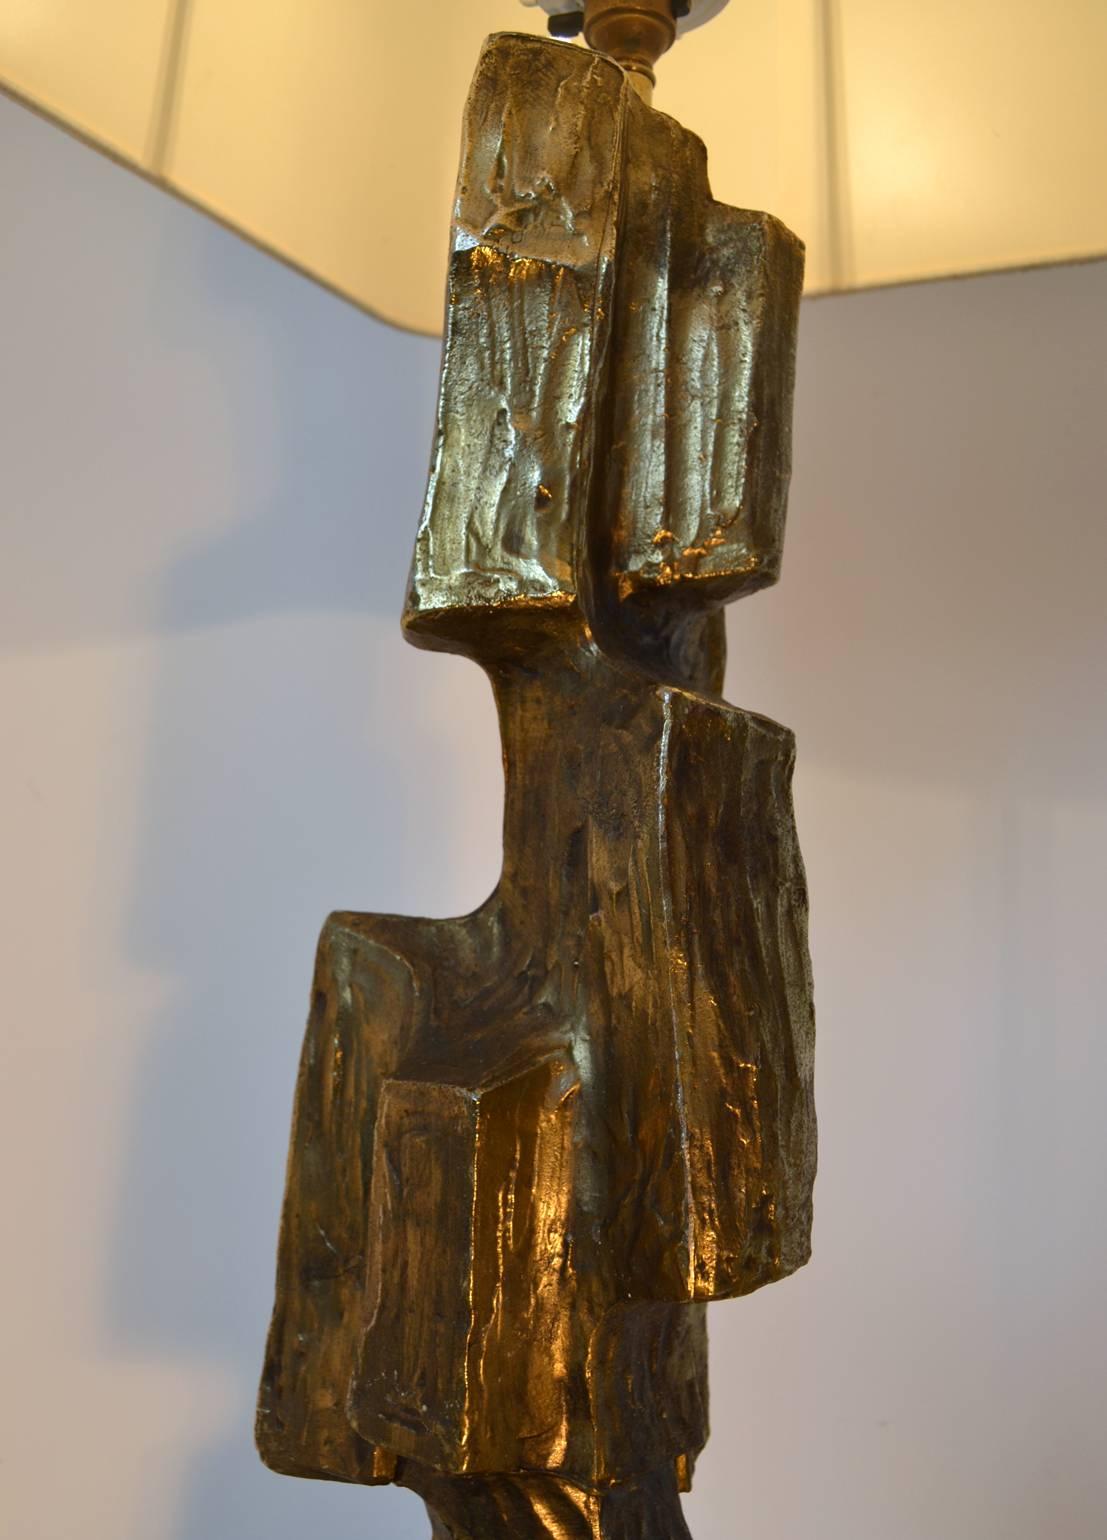 Cast Large Brutalist SculpturalTable Lamp by Maurizio Tempestini 1970s